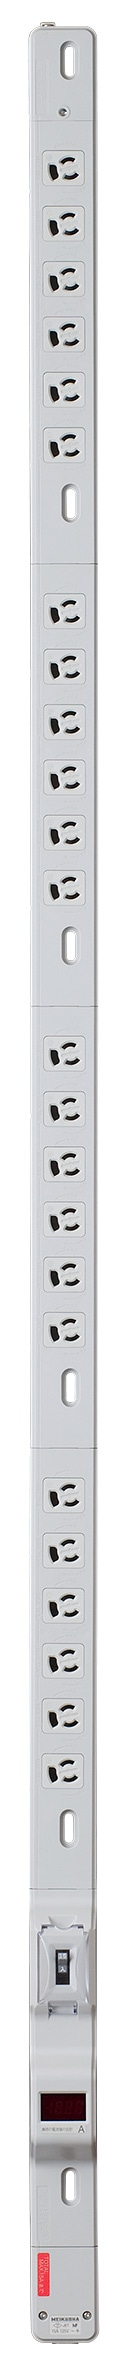 FM15Aコンセントバー(24コ口)20A安全ブレーカ･電流監視装置付